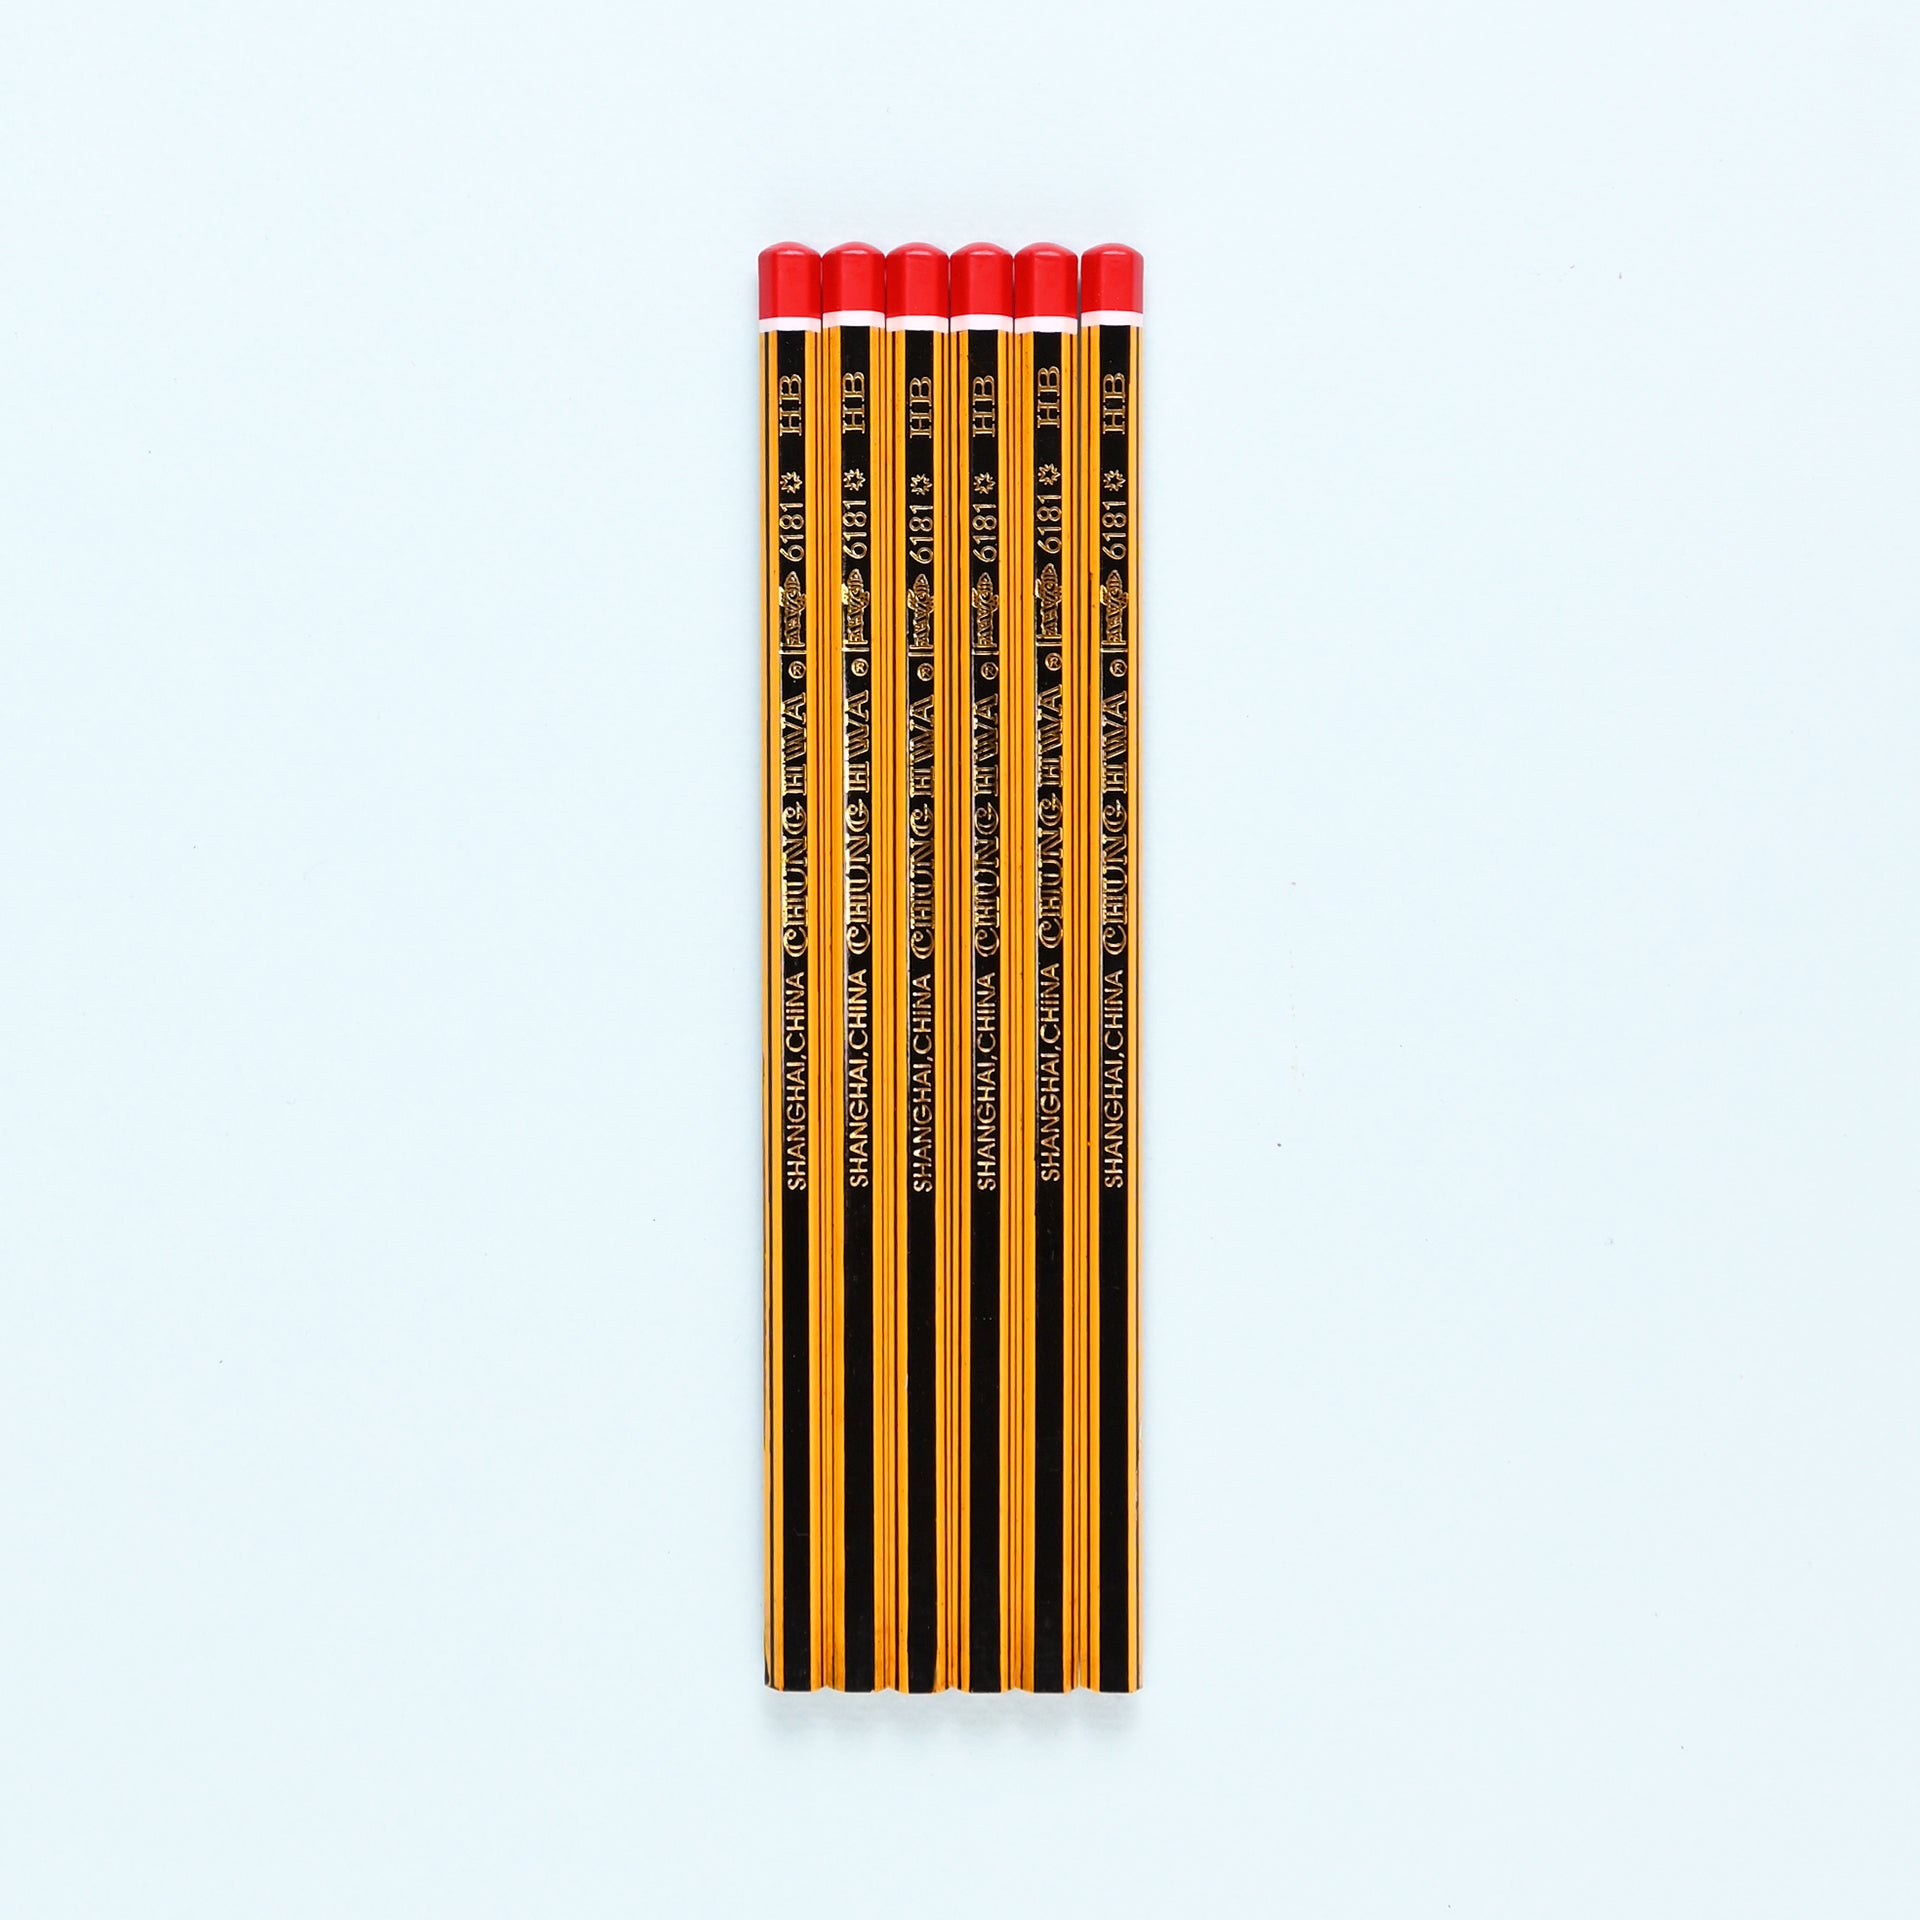 General's® China Marking Pencil, 2ct.